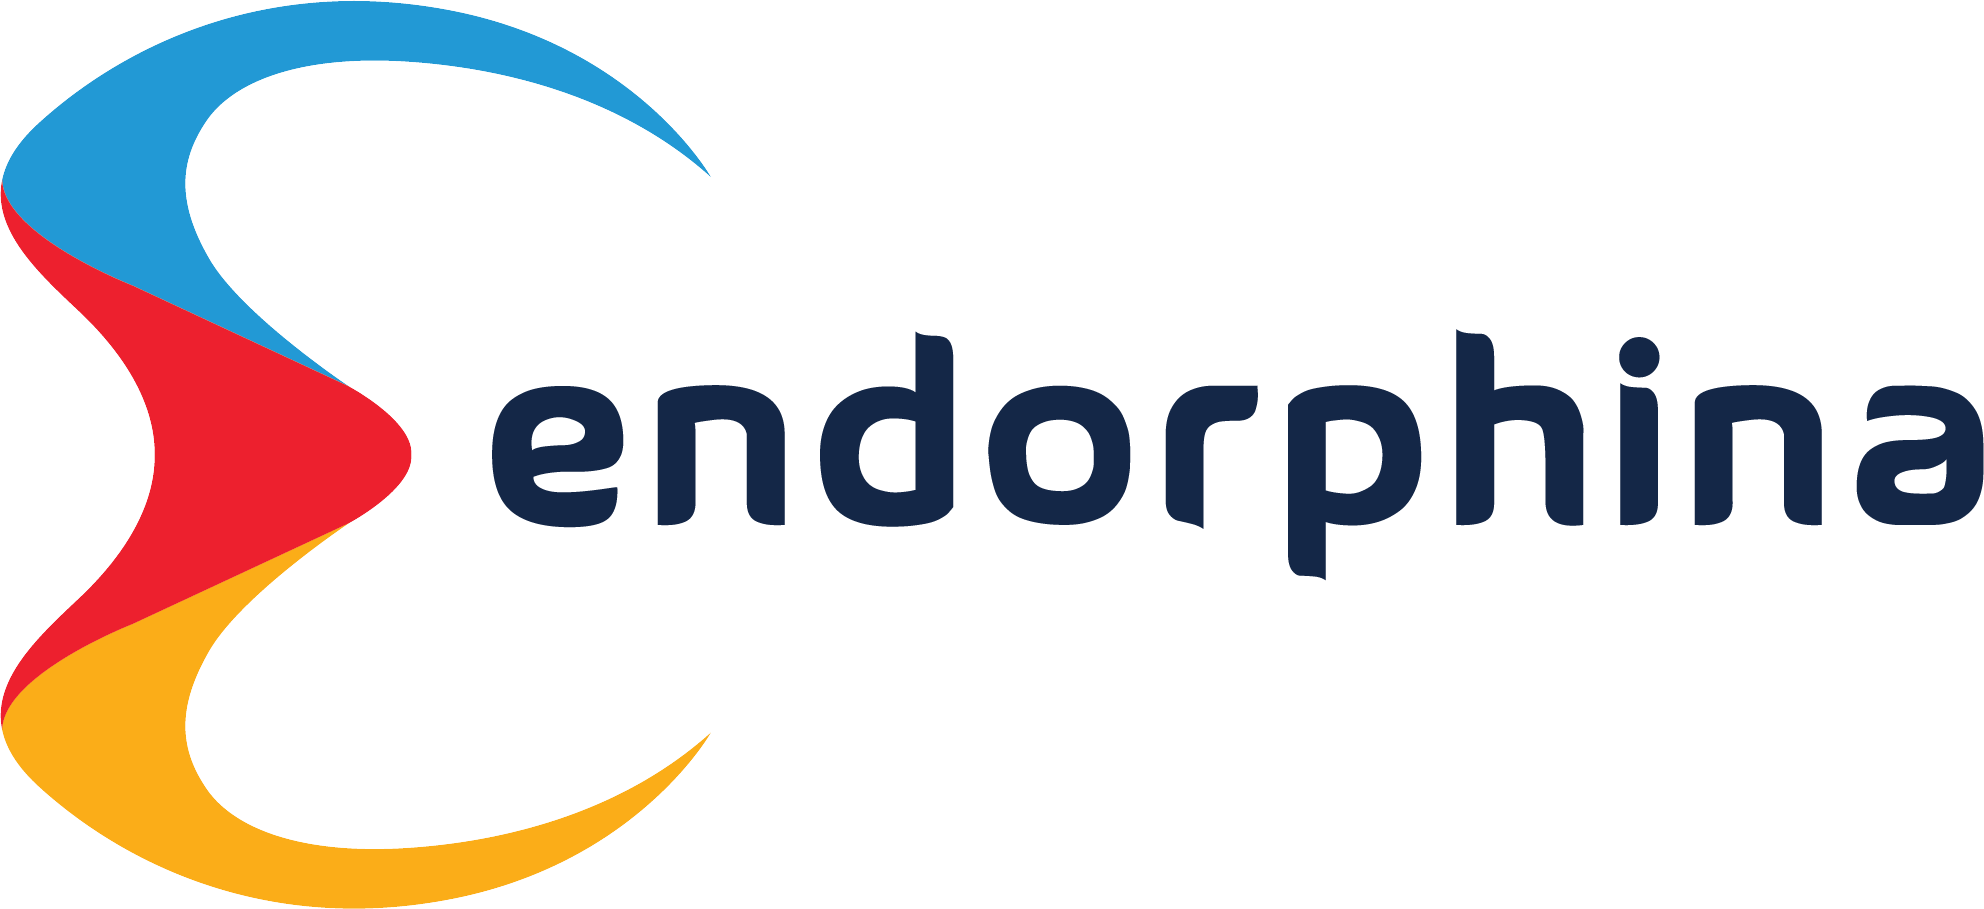 Endorphina logo